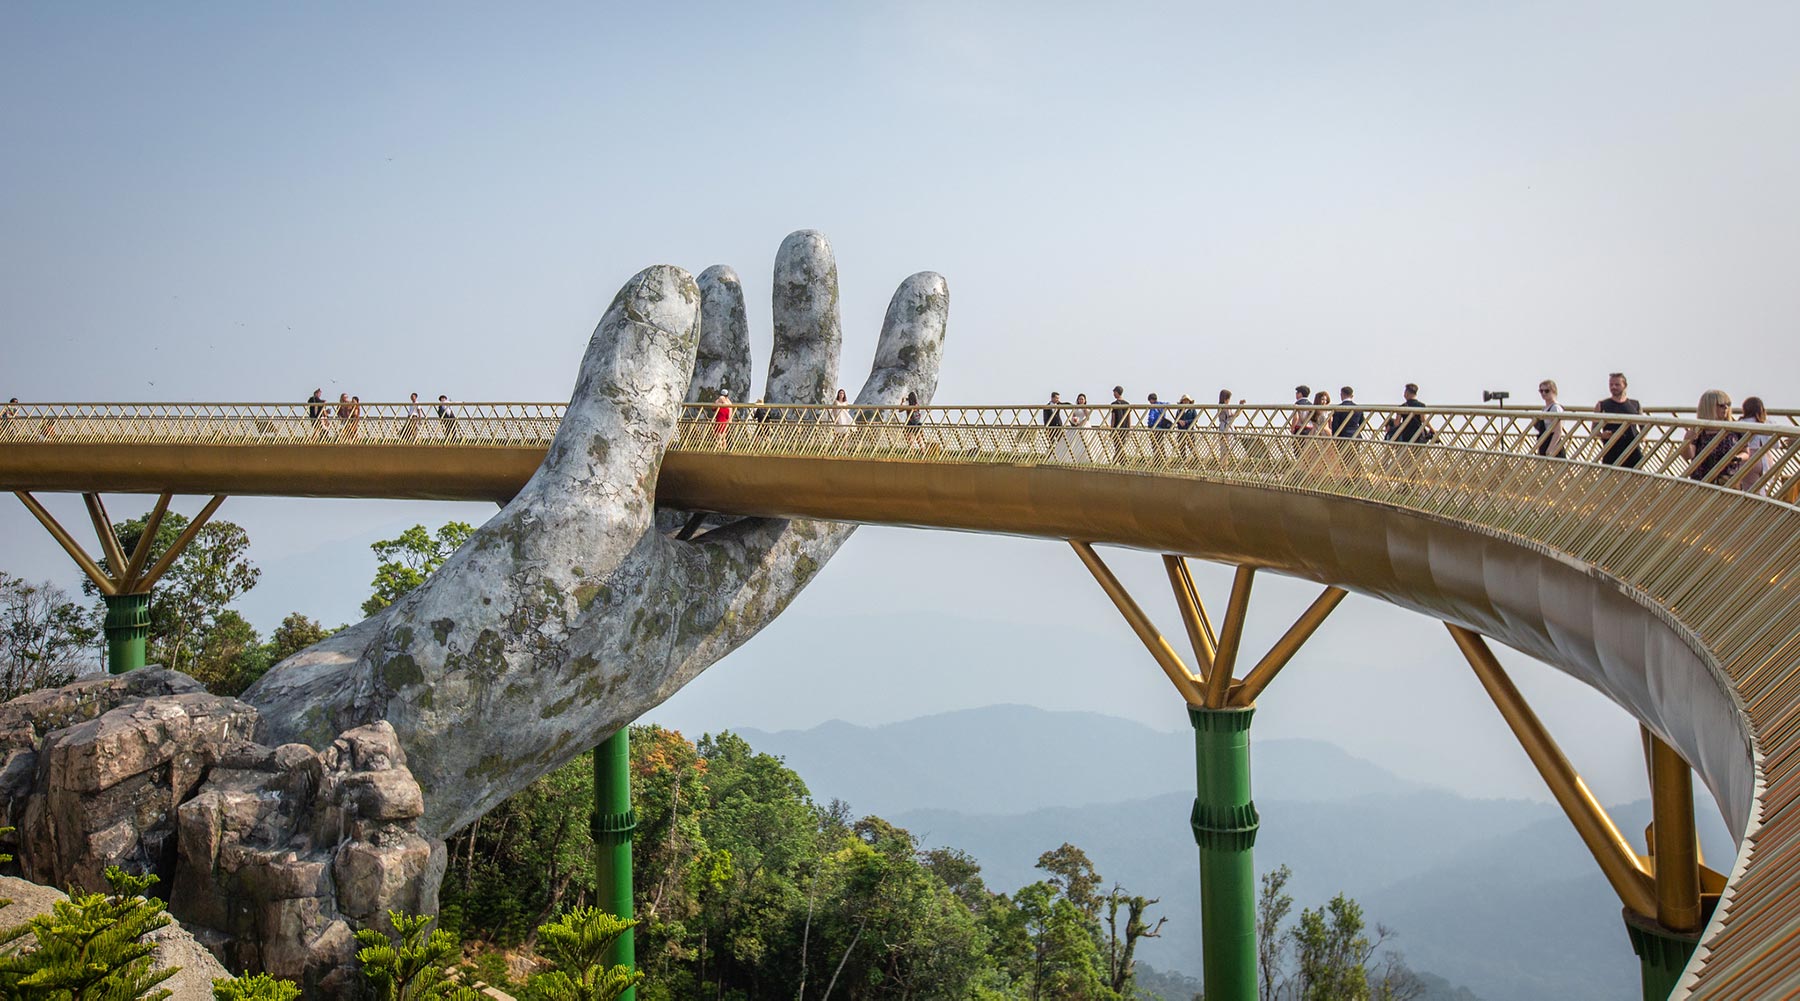 Ba Na Hills, Vietnam: The Must-See Resort Built For Instagram